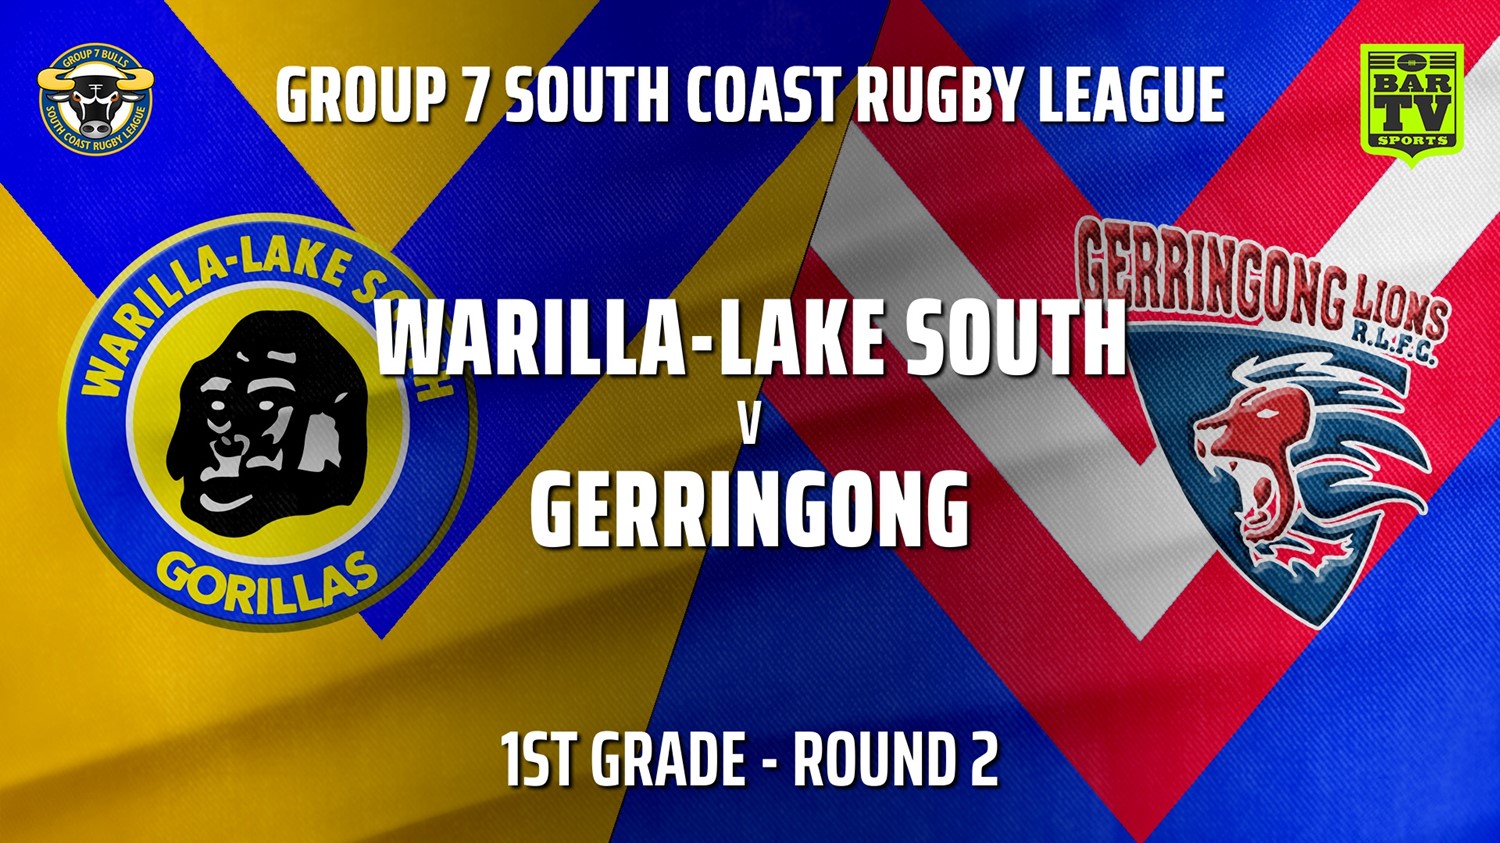 Group 7 RL Round 2 - 1st Grade - Warilla-Lake South v Gerringong Minigame Slate Image